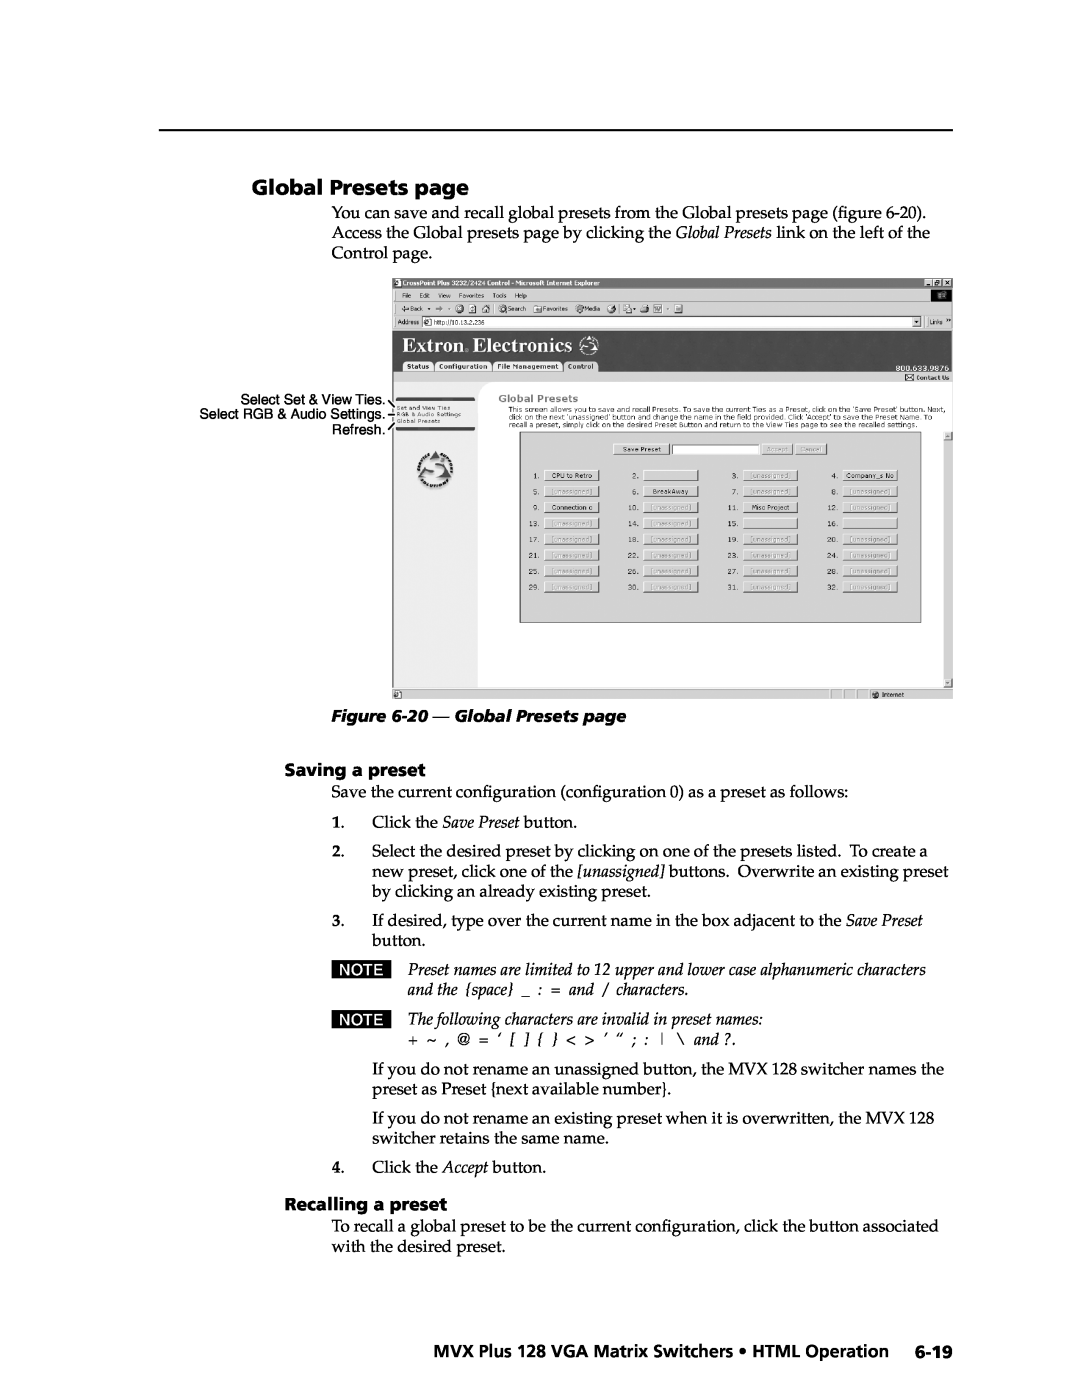 Extron electronic MVX PLUS 128 manual 20 - Global Presets page, Saving a preset, Recalling a preset 